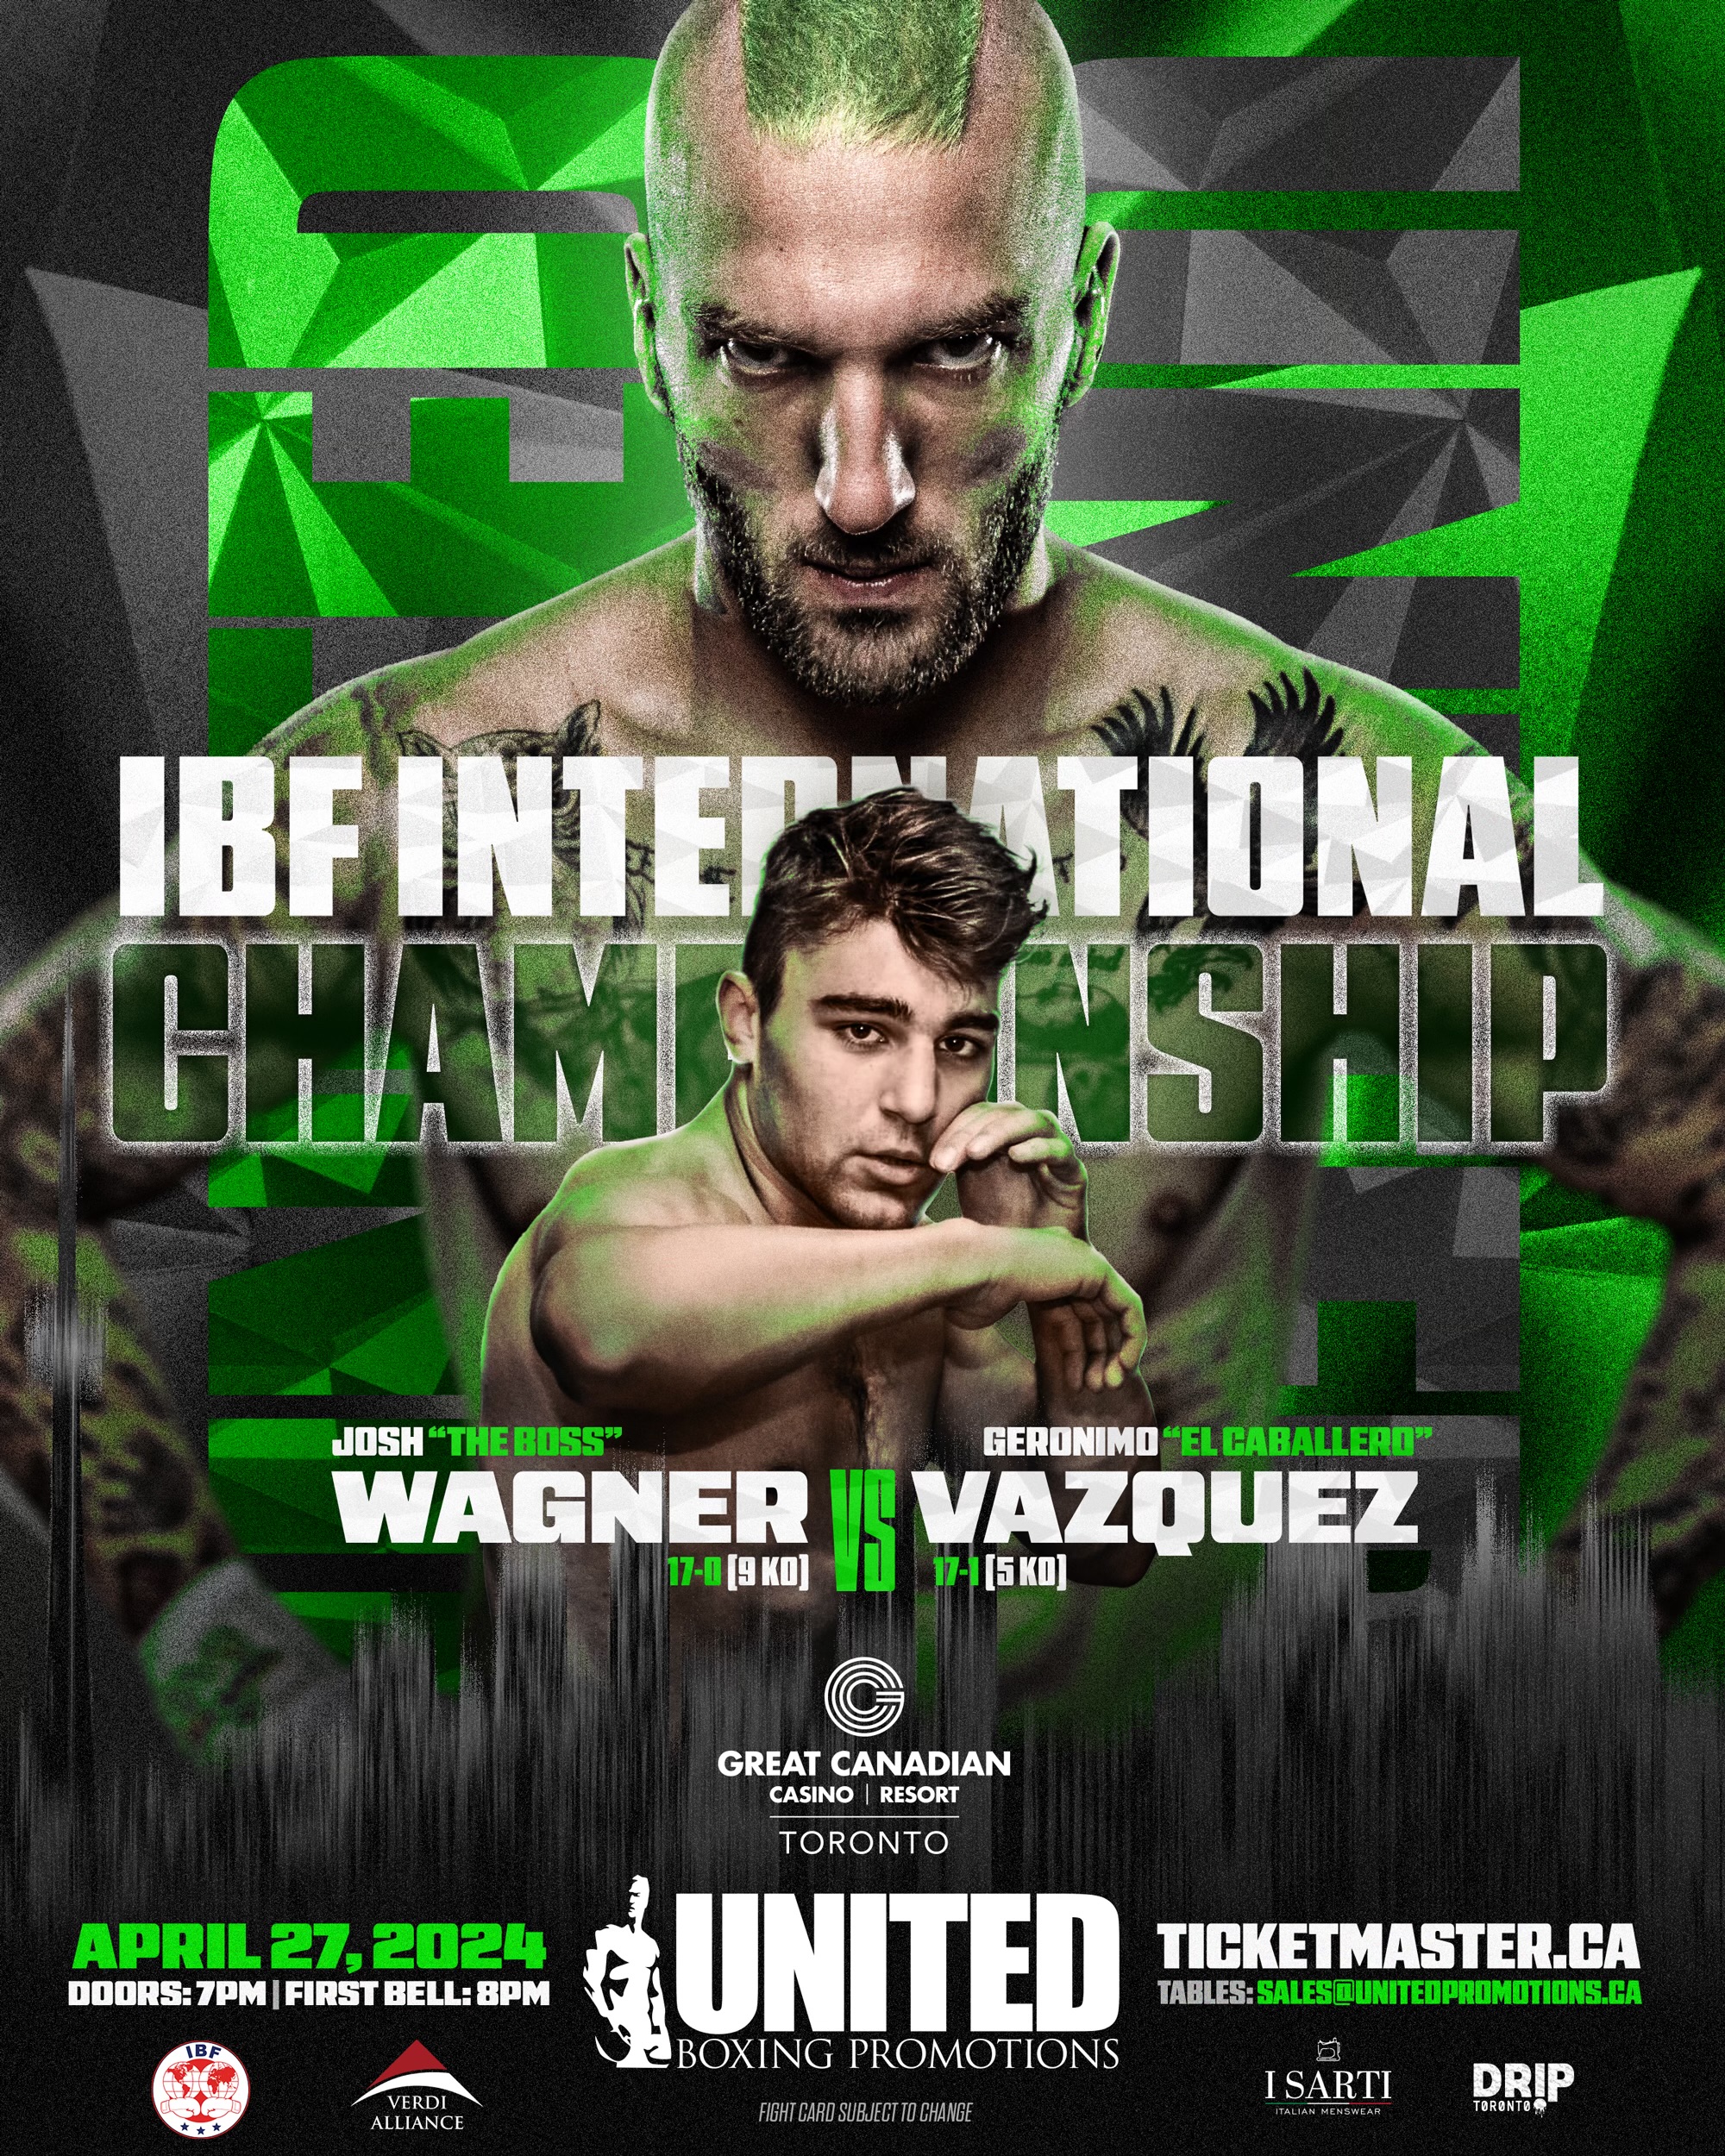 WAGNER-VAZQUEZ APR. 27 IBF INTERNATIONAL TITLE